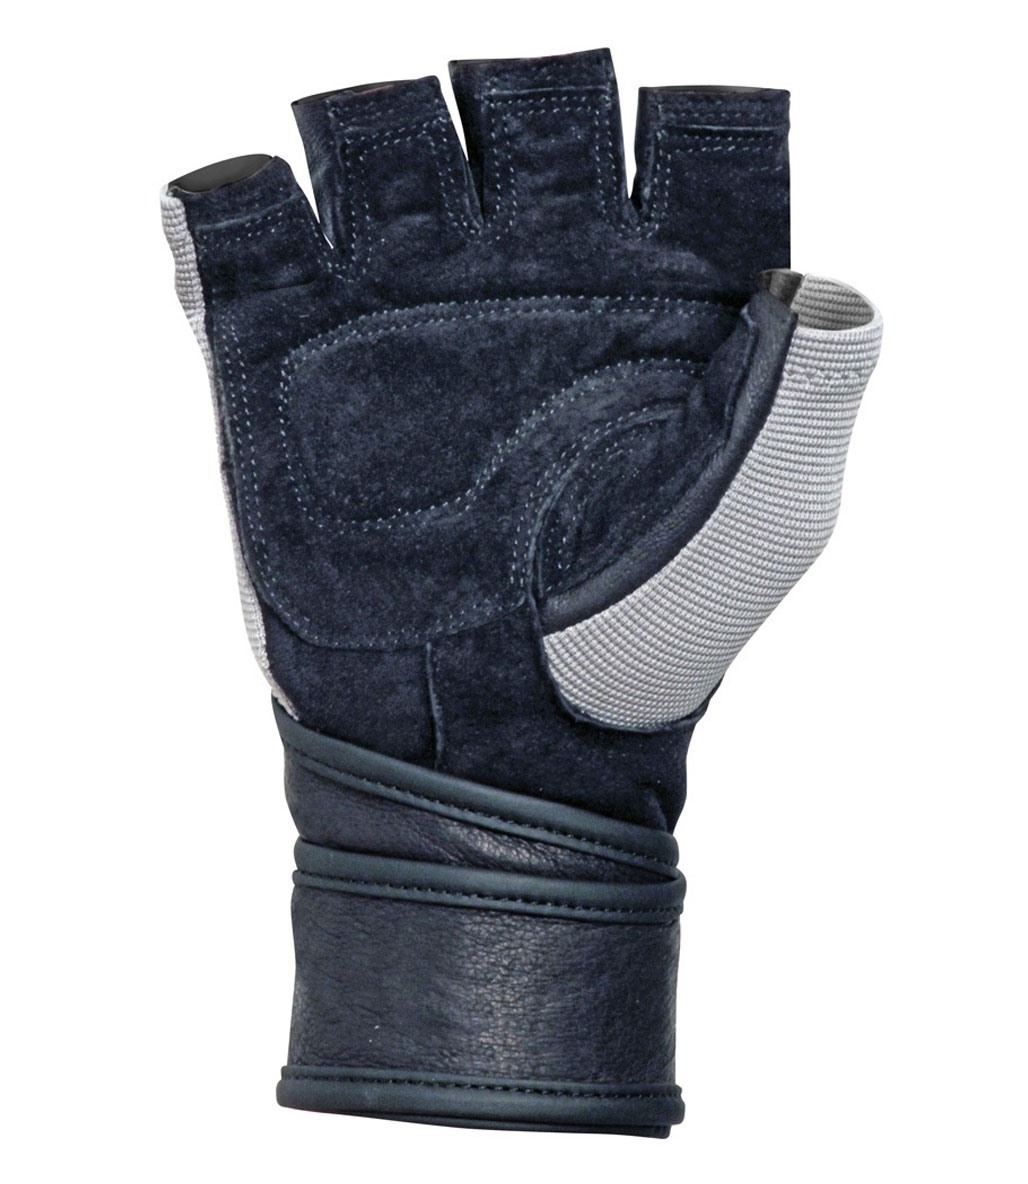 Harbinger Classic Wristwrap Glove Gri